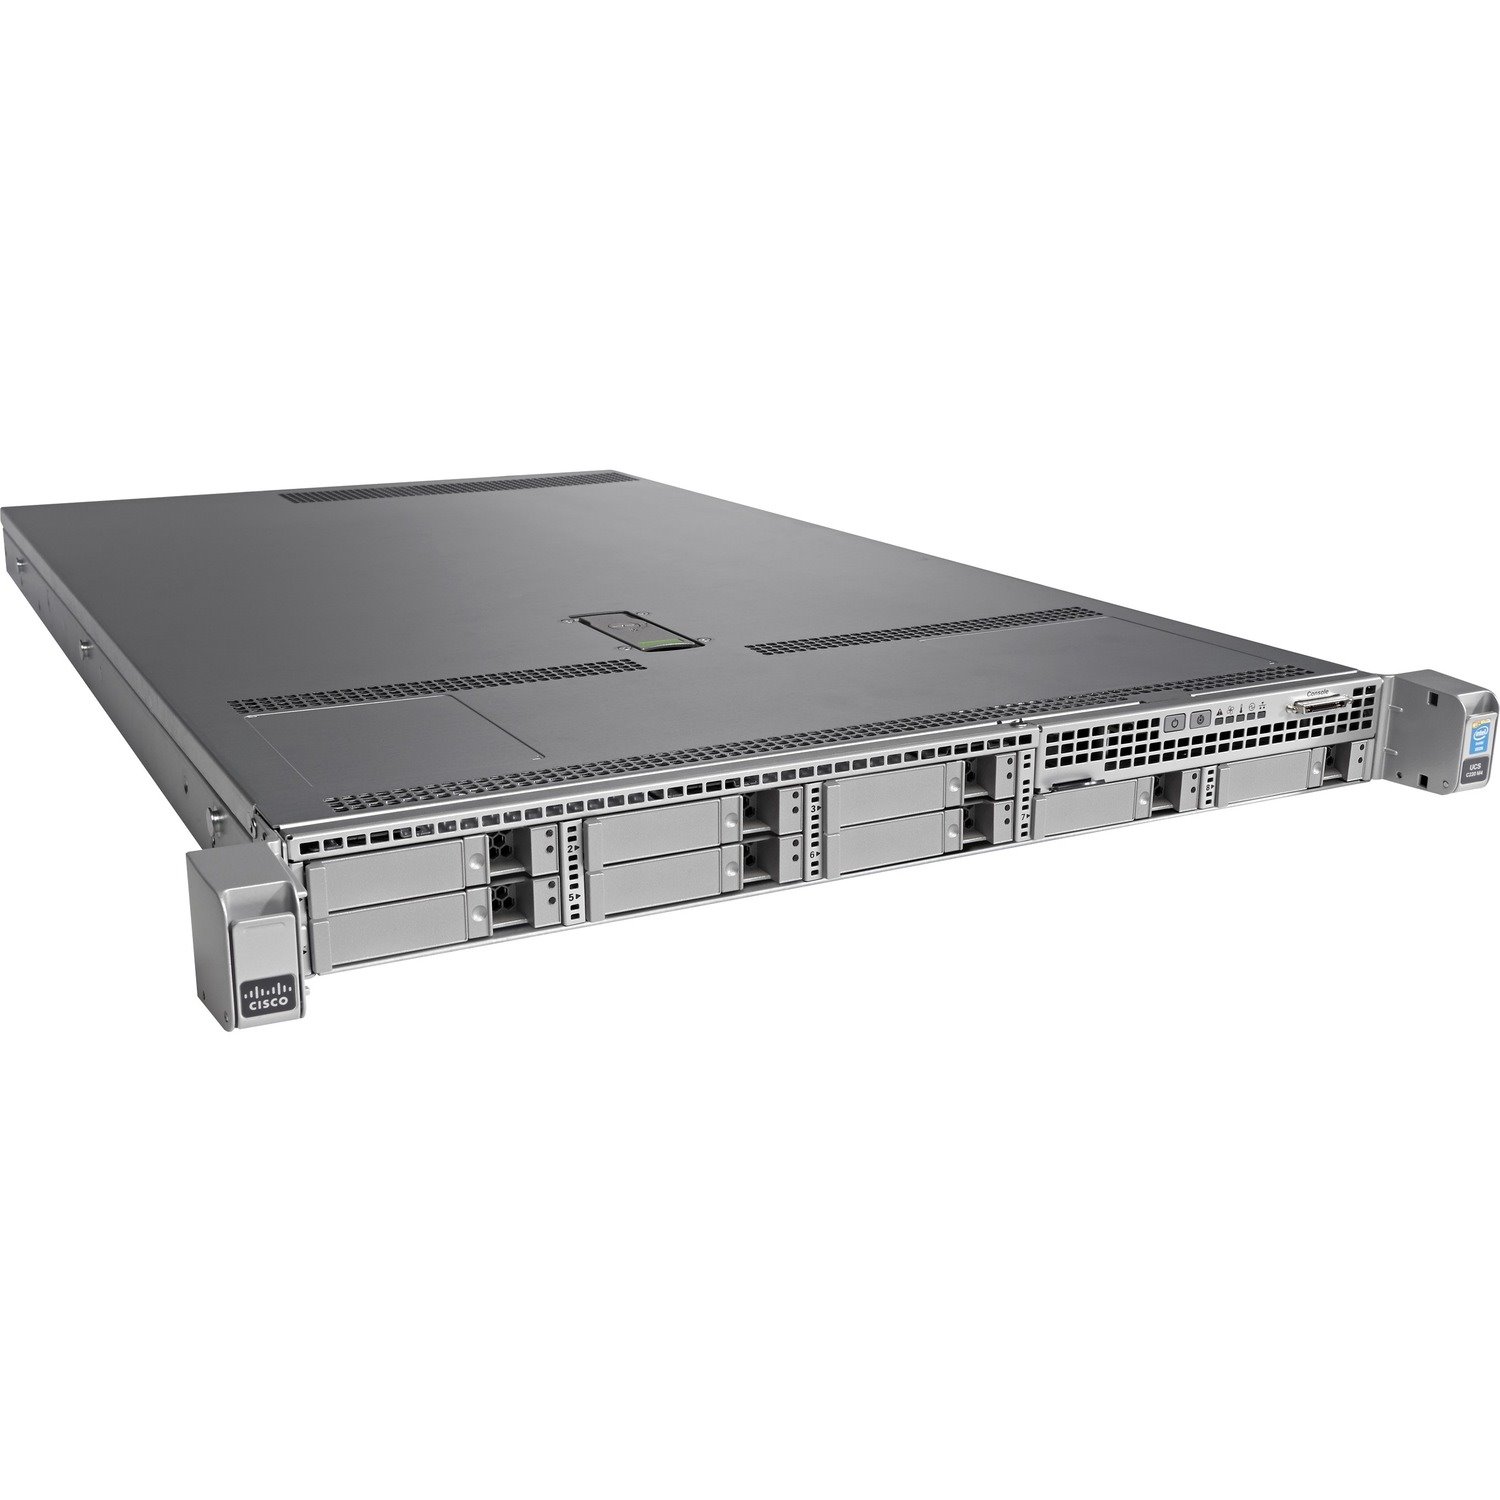 Cisco C220 M4 1U Rack Server - 2 x Intel Xeon E5-2620 v4 2.10 GHz - 32 GB RAM - 12Gb/s SAS Controller - Refurbished